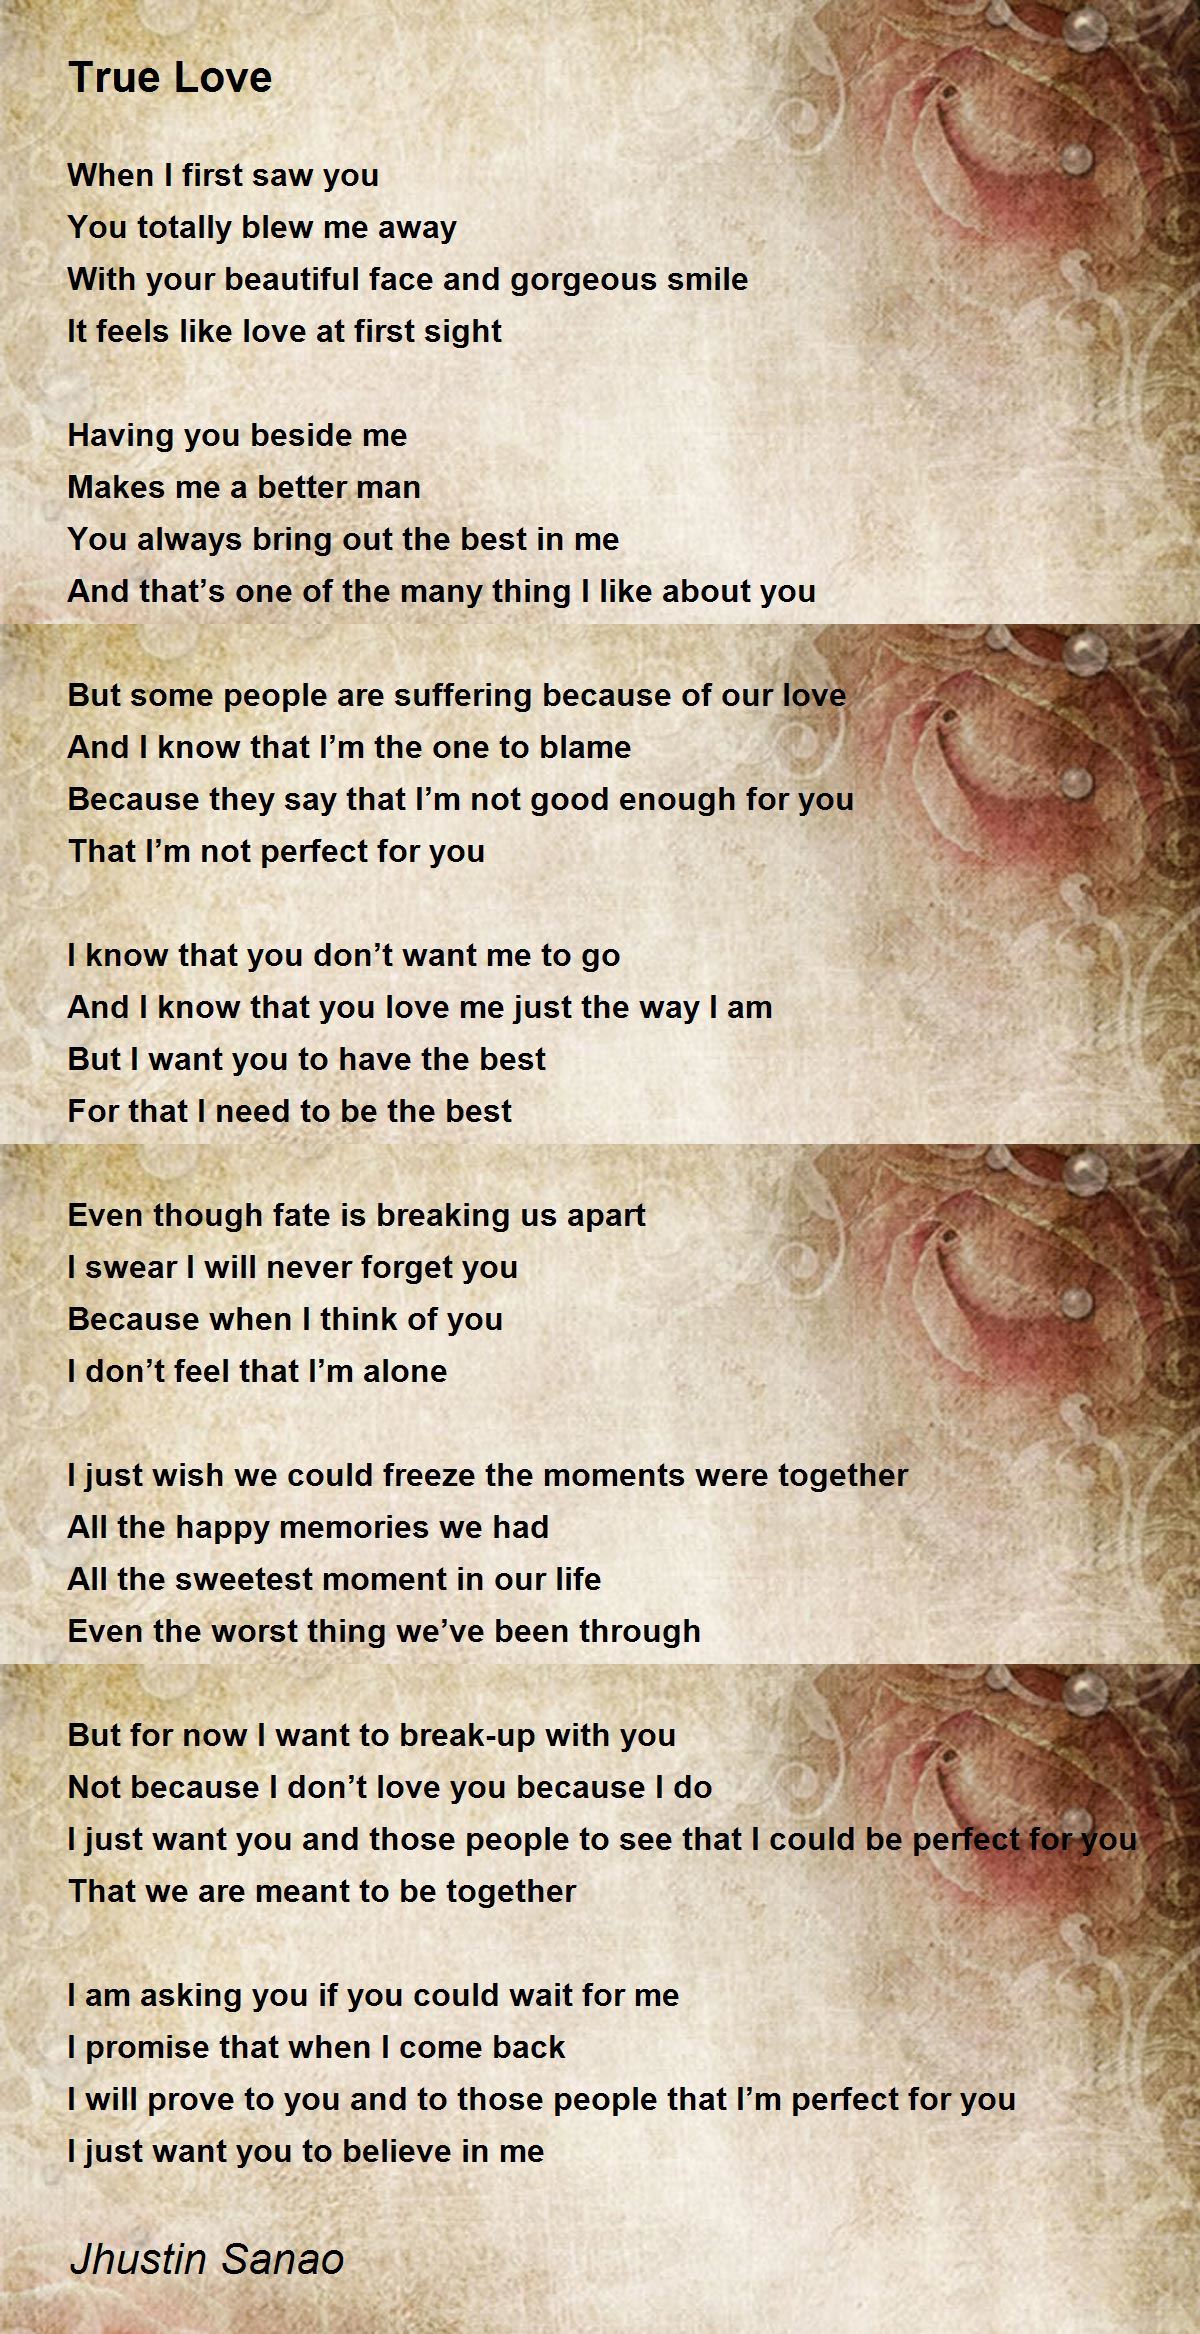 True Love - True Love Poem by Jhustin Sanao